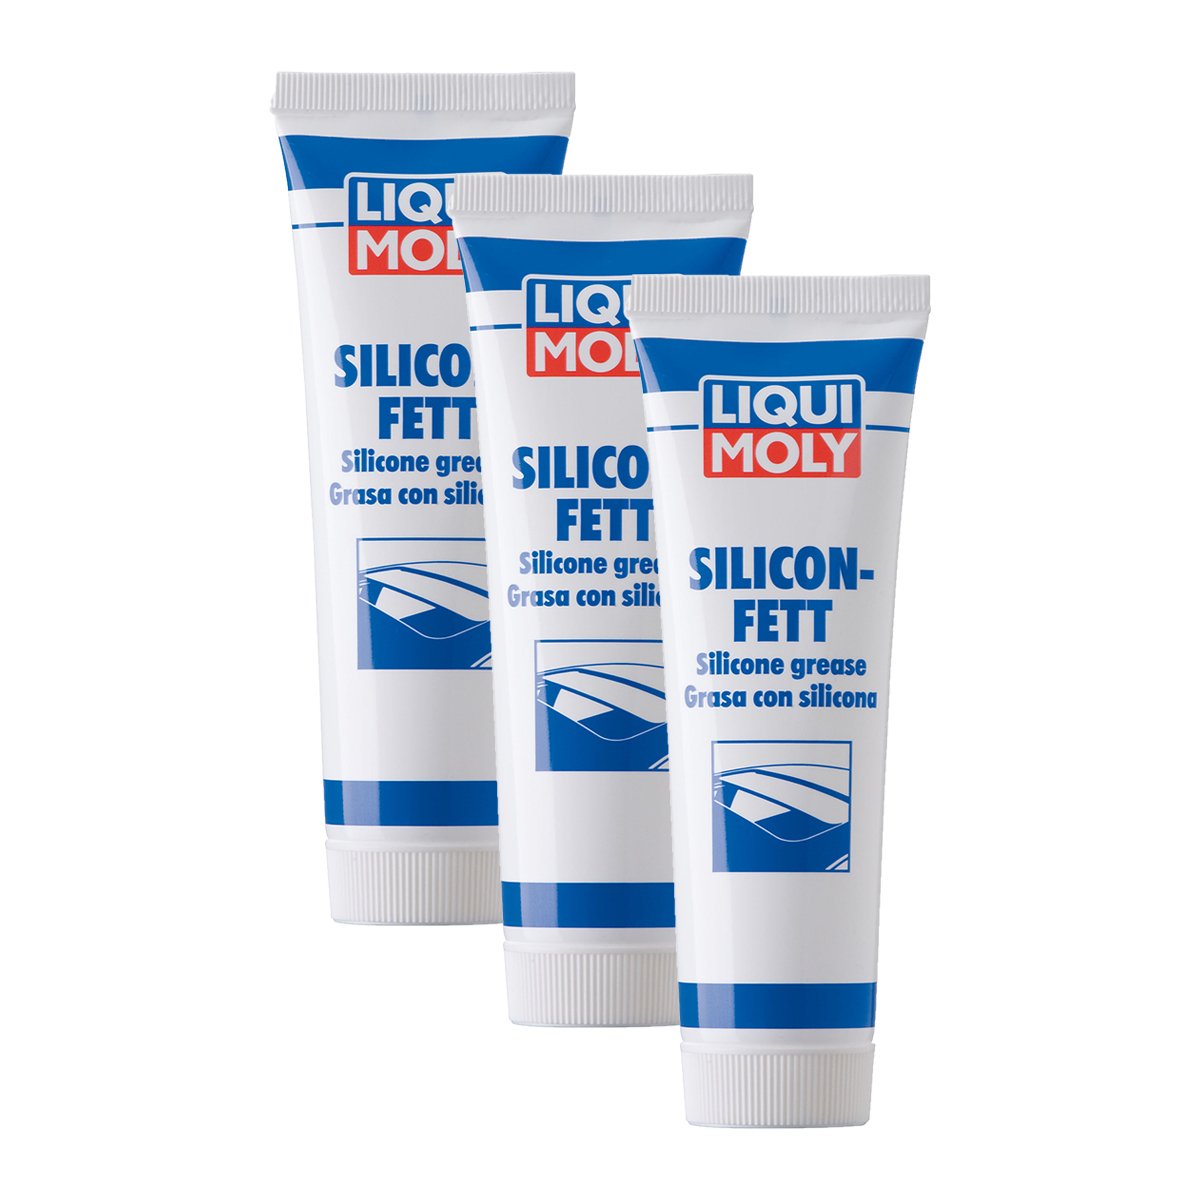 3X LIQUI Moly 3312 Silicon-Fett transparent Silikonfett Paste Schmiermittel 100g